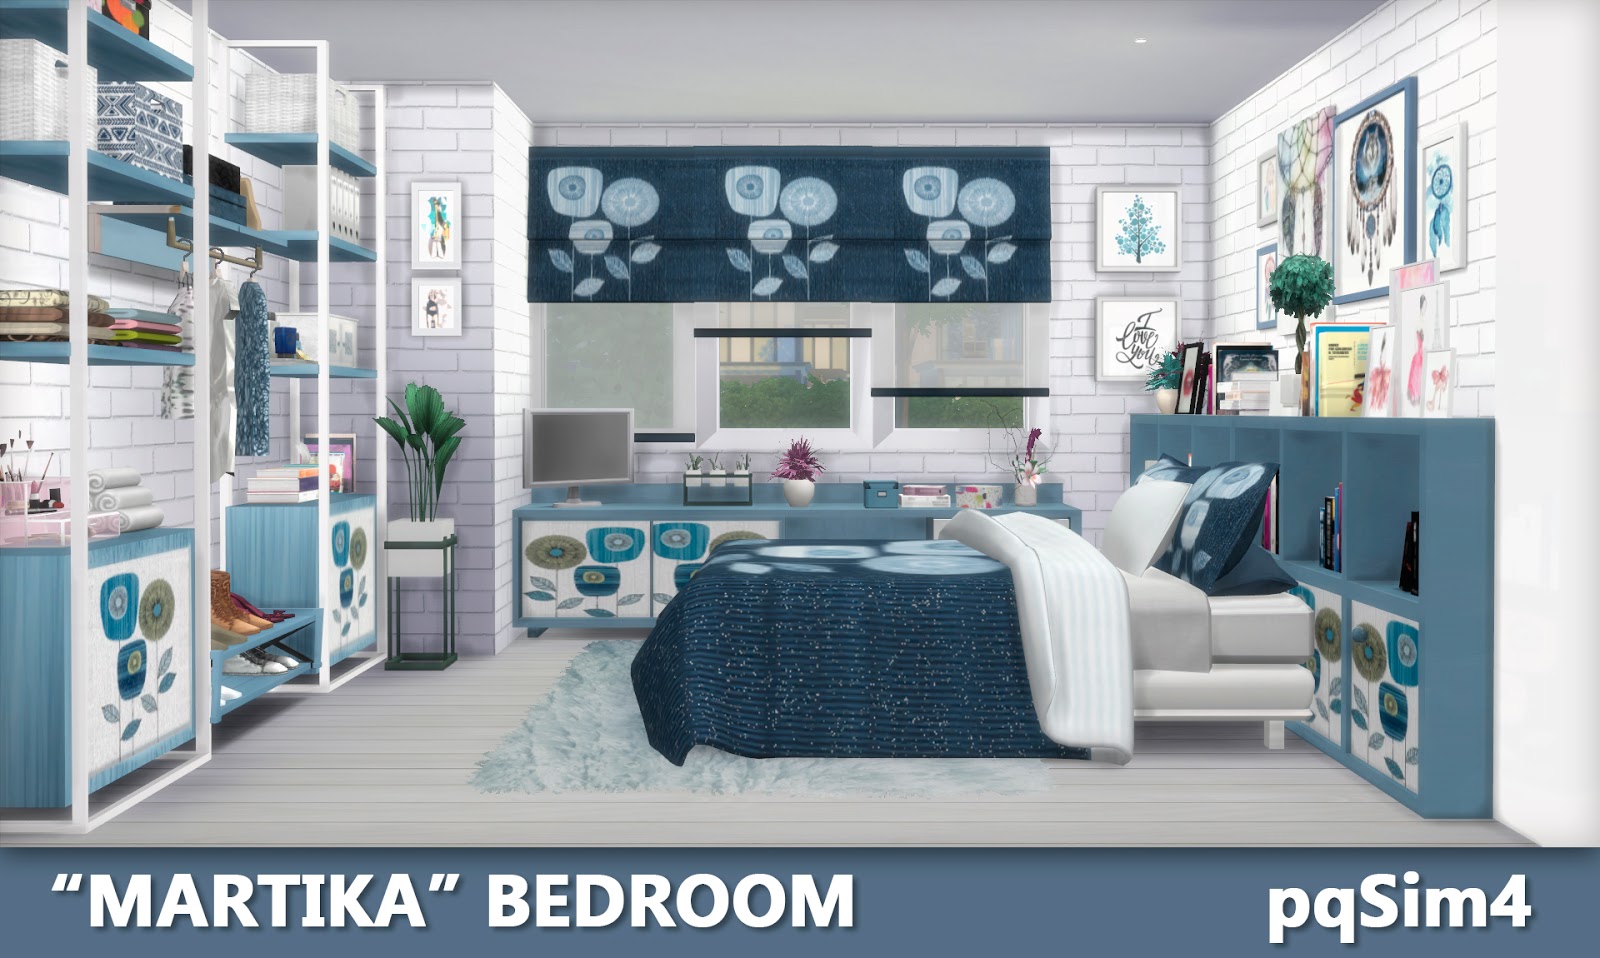 Pqsim4 Martika Bedroom Sims 4 Custom Content Muebles